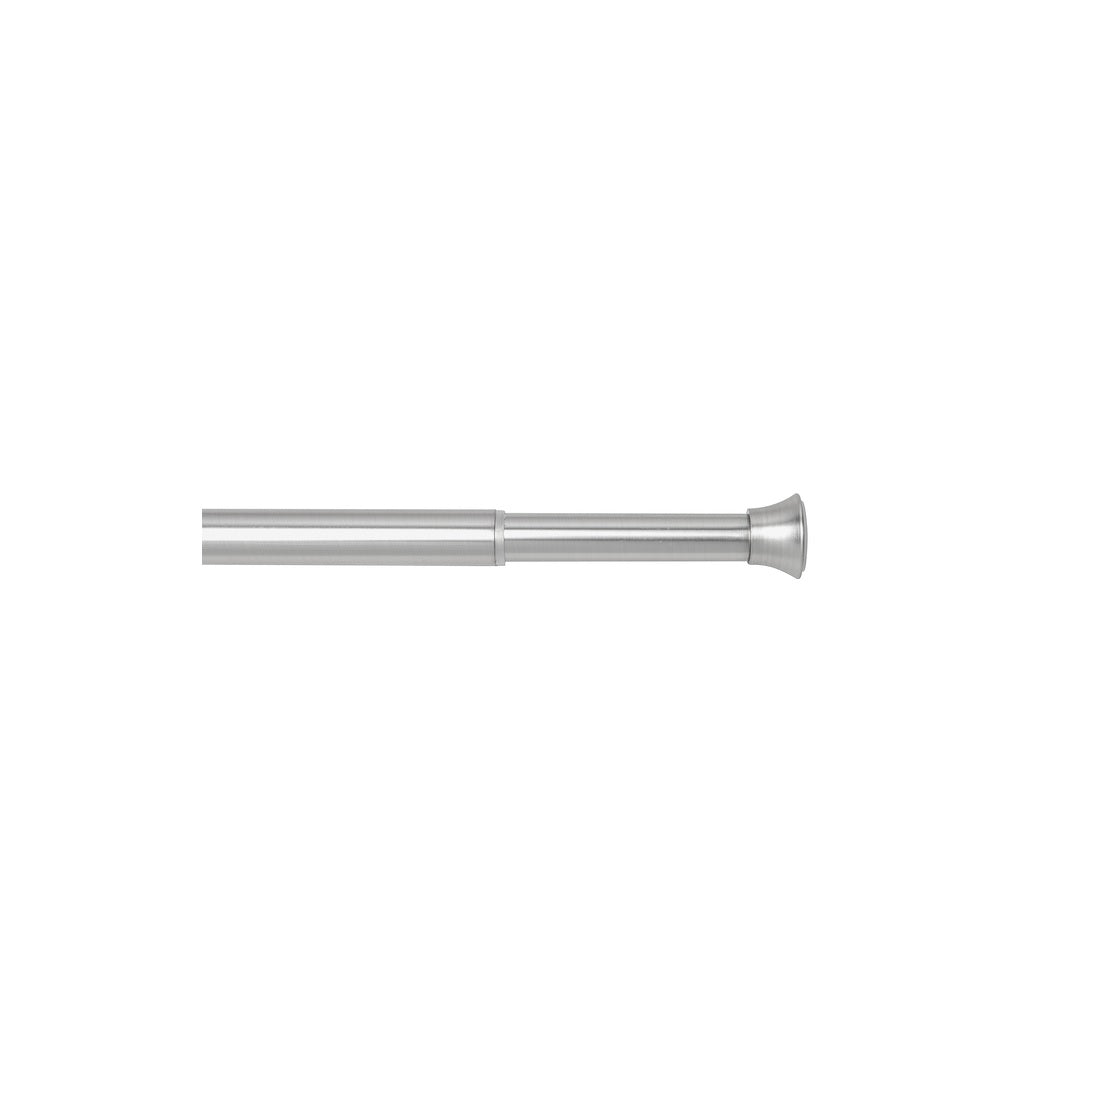 Umbra 244923-410 Modern Tension Rod, Steel, Silver